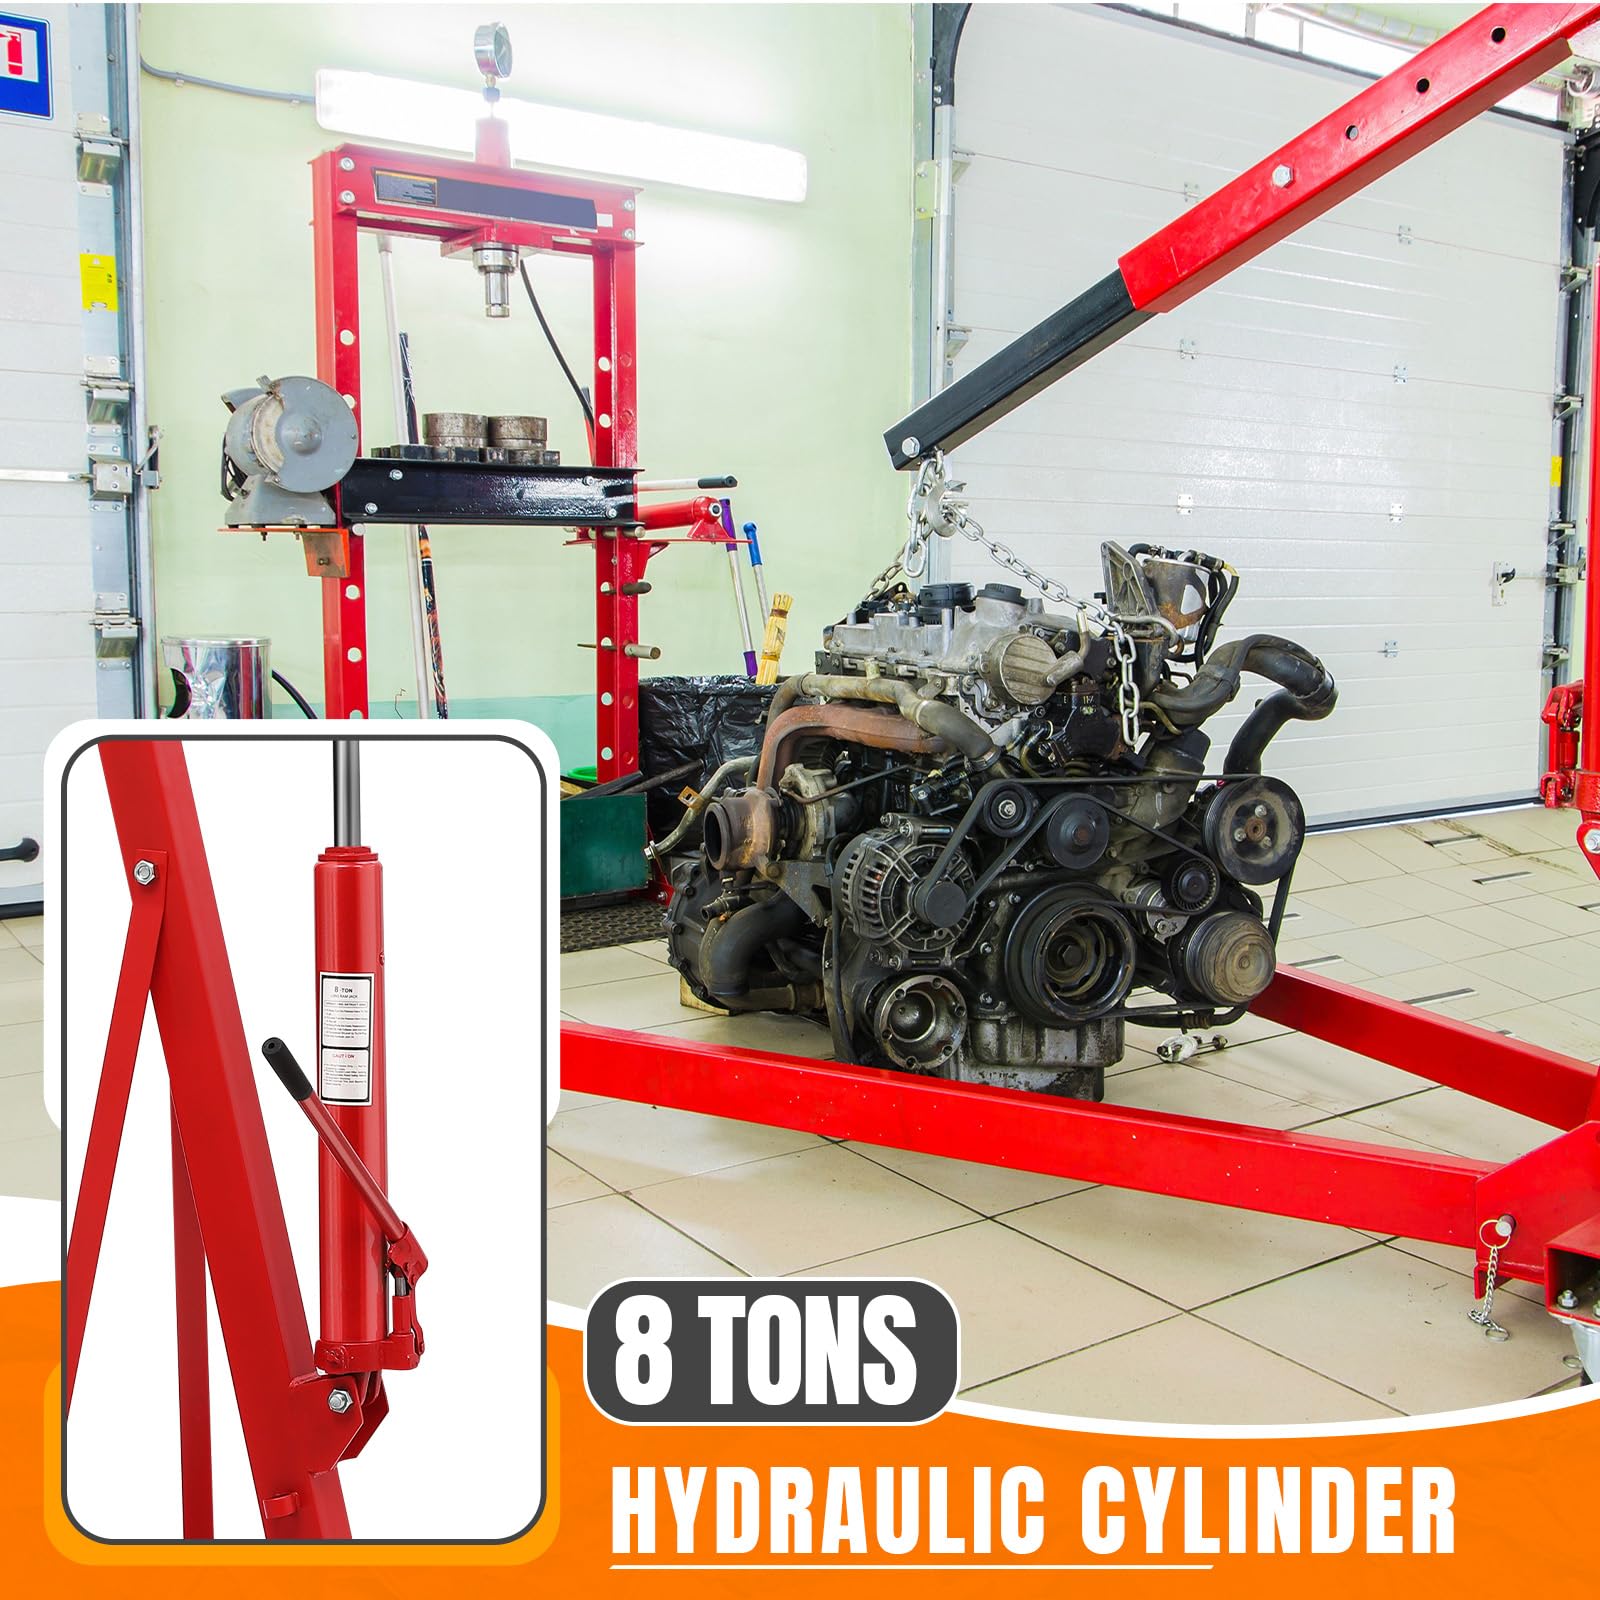 4400LBS Engine Hoist, Folding Hydraulic Hoists Cherry Picker, Heavy Duty Engine Crane Lifter, Re